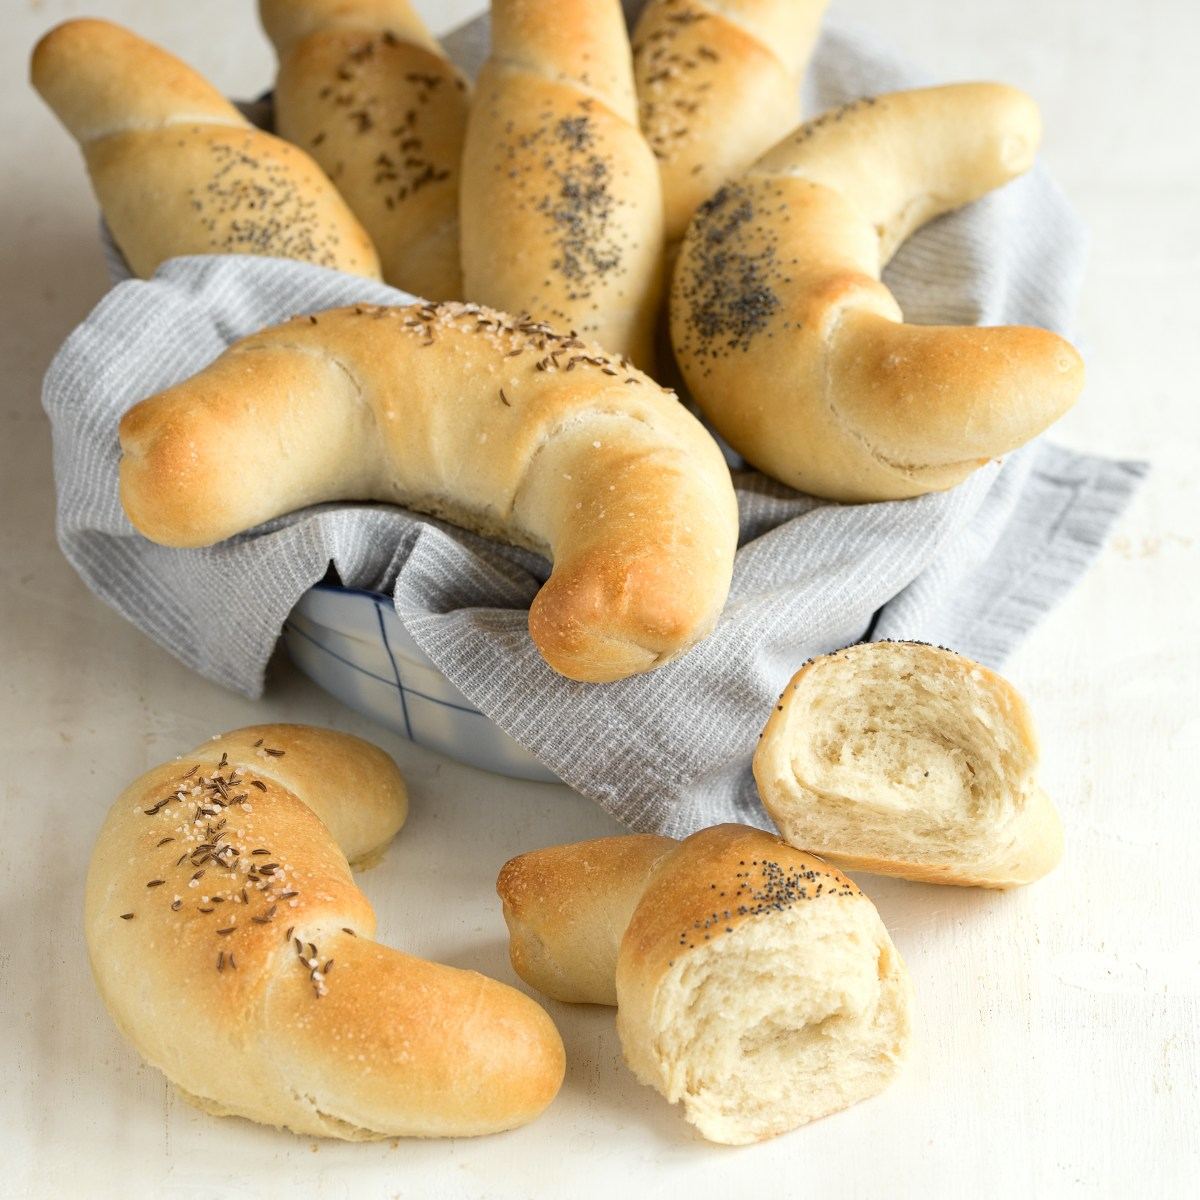 Czech rohliky bread rolls served on a kitchen towel.